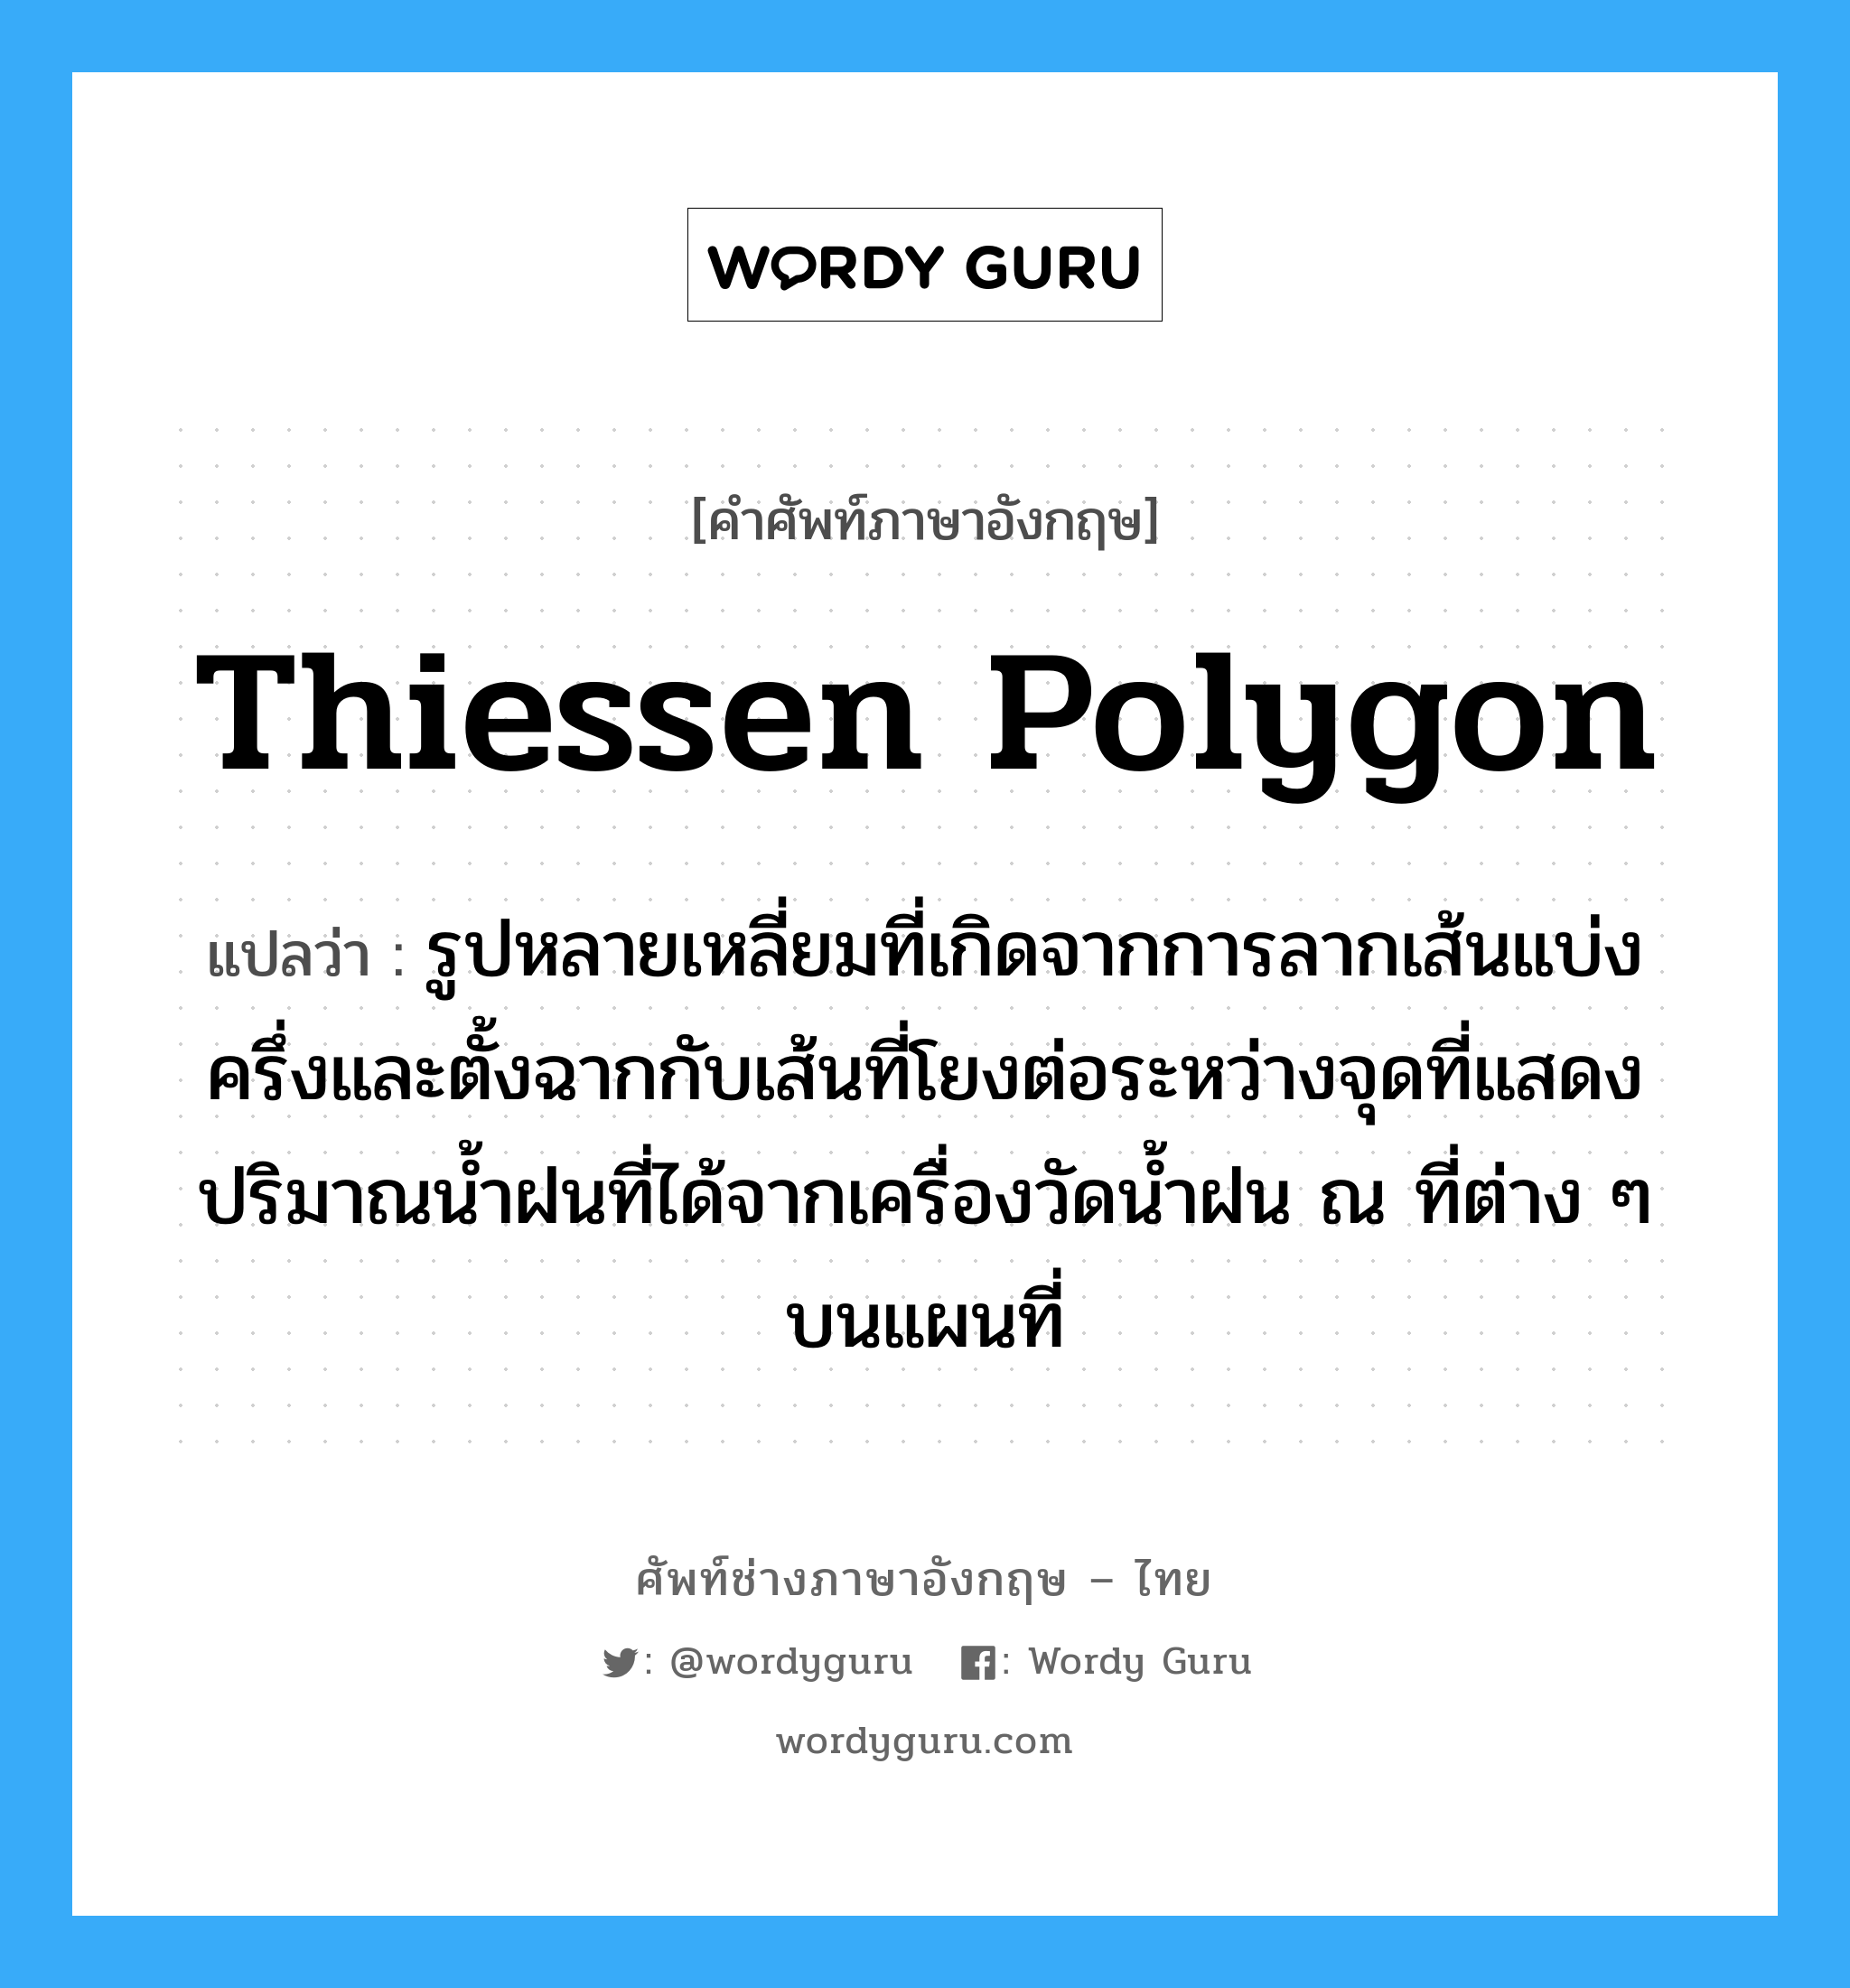 thiessen polygon แปลว่า?, คำศัพท์ช่างภาษาอังกฤษ - ไทย thiessen polygon คำศัพท์ภาษาอังกฤษ thiessen polygon แปลว่า รูปหลายเหลี่ยมที่เกิดจากการลากเส้นแบ่งครึ่งและตั้งฉากกับเส้นที่โยงต่อระหว่างจุดที่แสดงปริมาณน้ำฝนที่ได้จากเครื่องวัดน้ำฝน ณ ที่ต่าง ๆ บนแผนที่